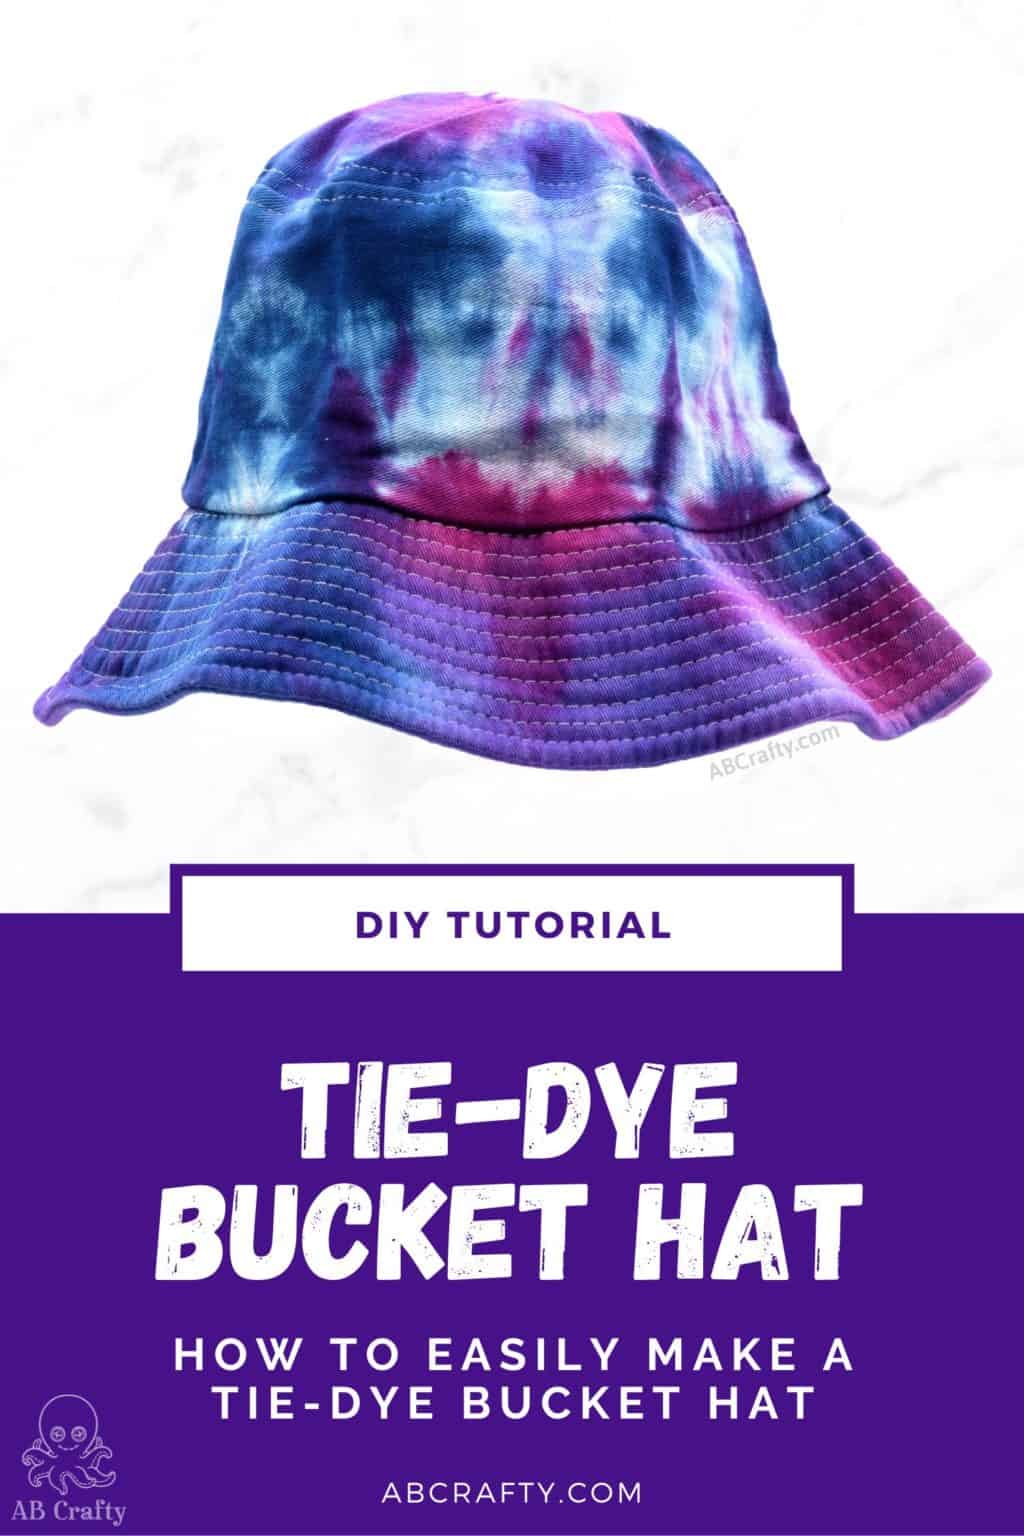 blue, purple, and pink tie dye bucket hat with the title "tie-dye bucket hat" - how to easily tie dye bucket hats